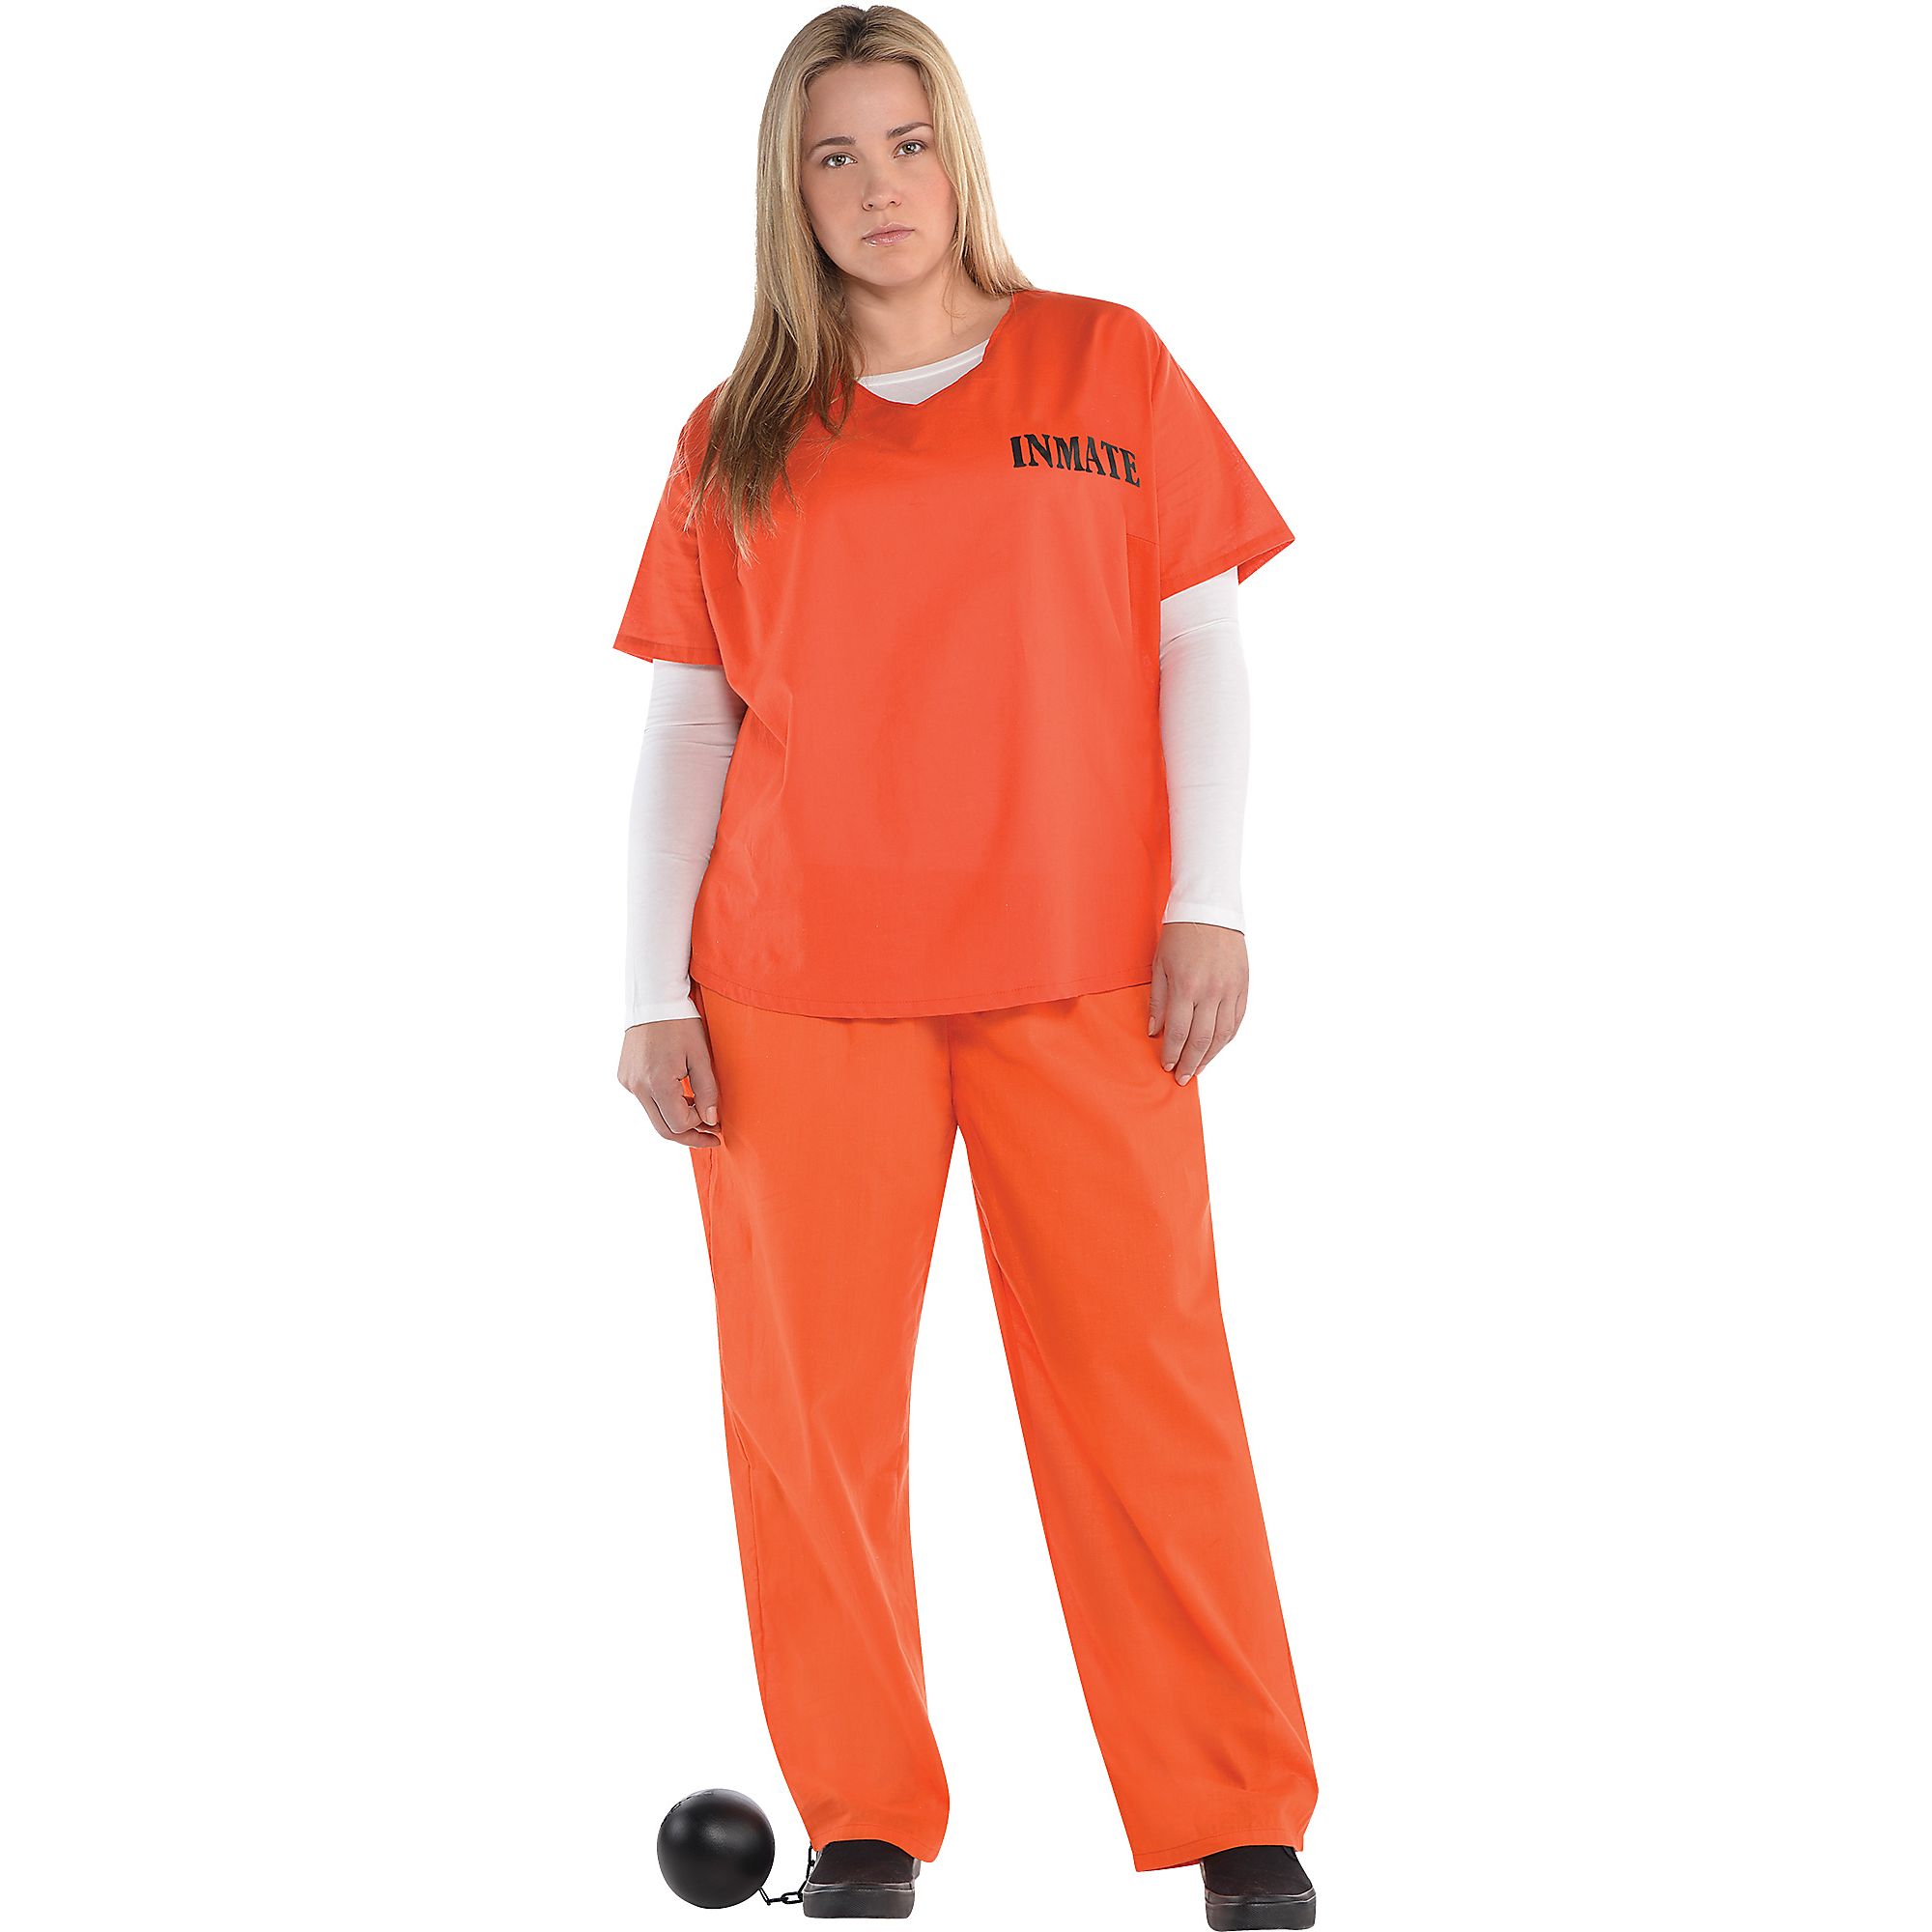 Womens Orange Prisoner Costume Plus Size Jumpsuit Prison Shirt And